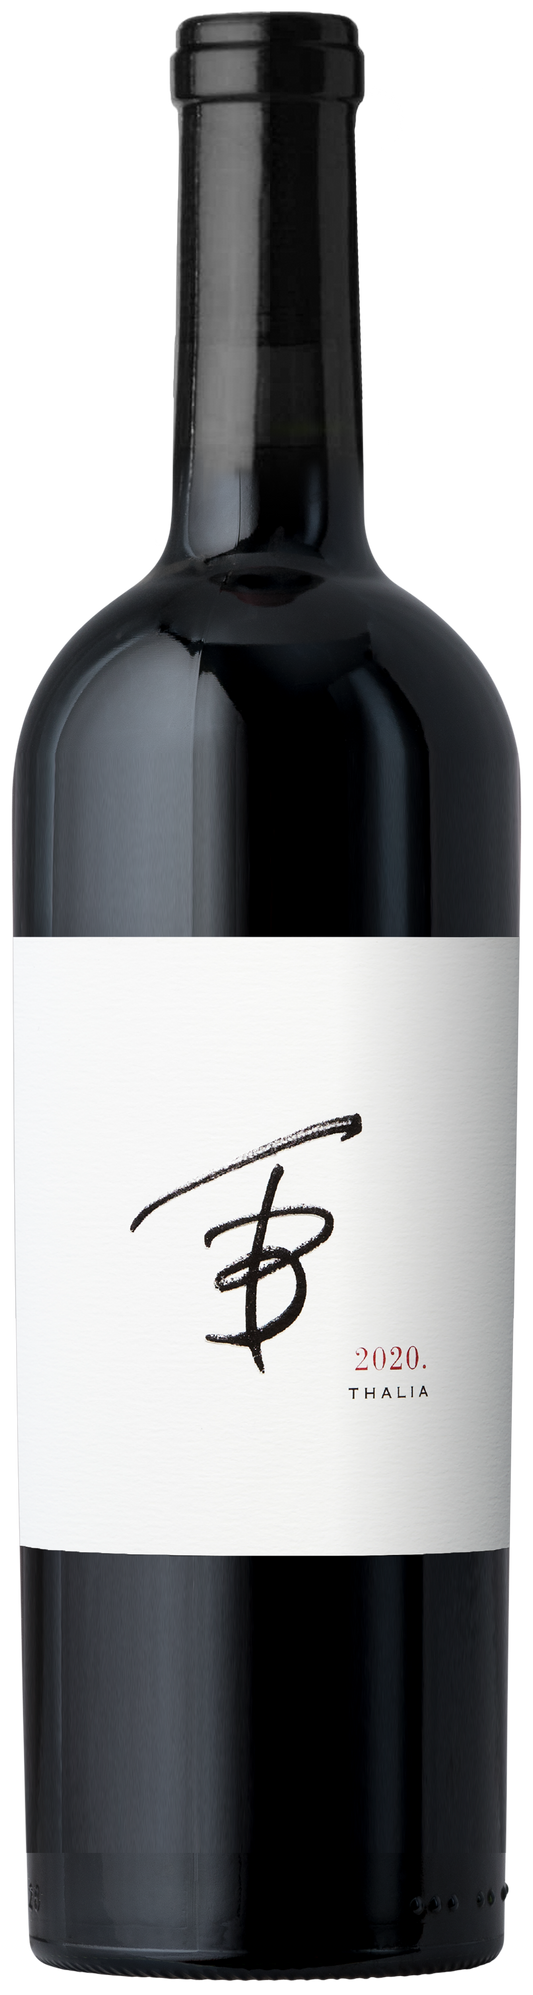 T. Berkley Wines "Thalia" Cabernet Franc 2020